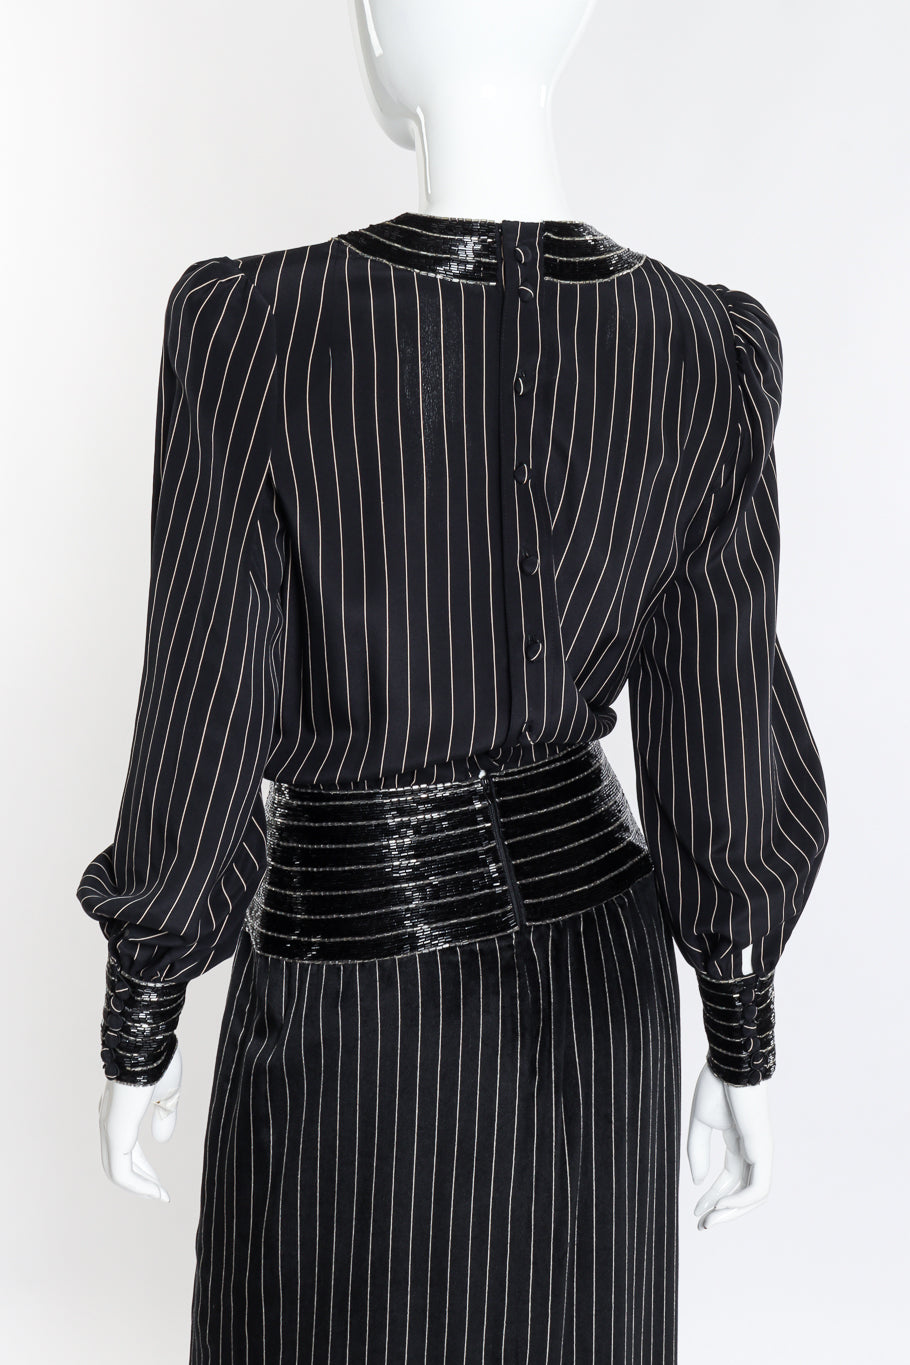 Vintage Adele Simpson Beaded Pinstripe Dress back on mannequin closeup @recess la 